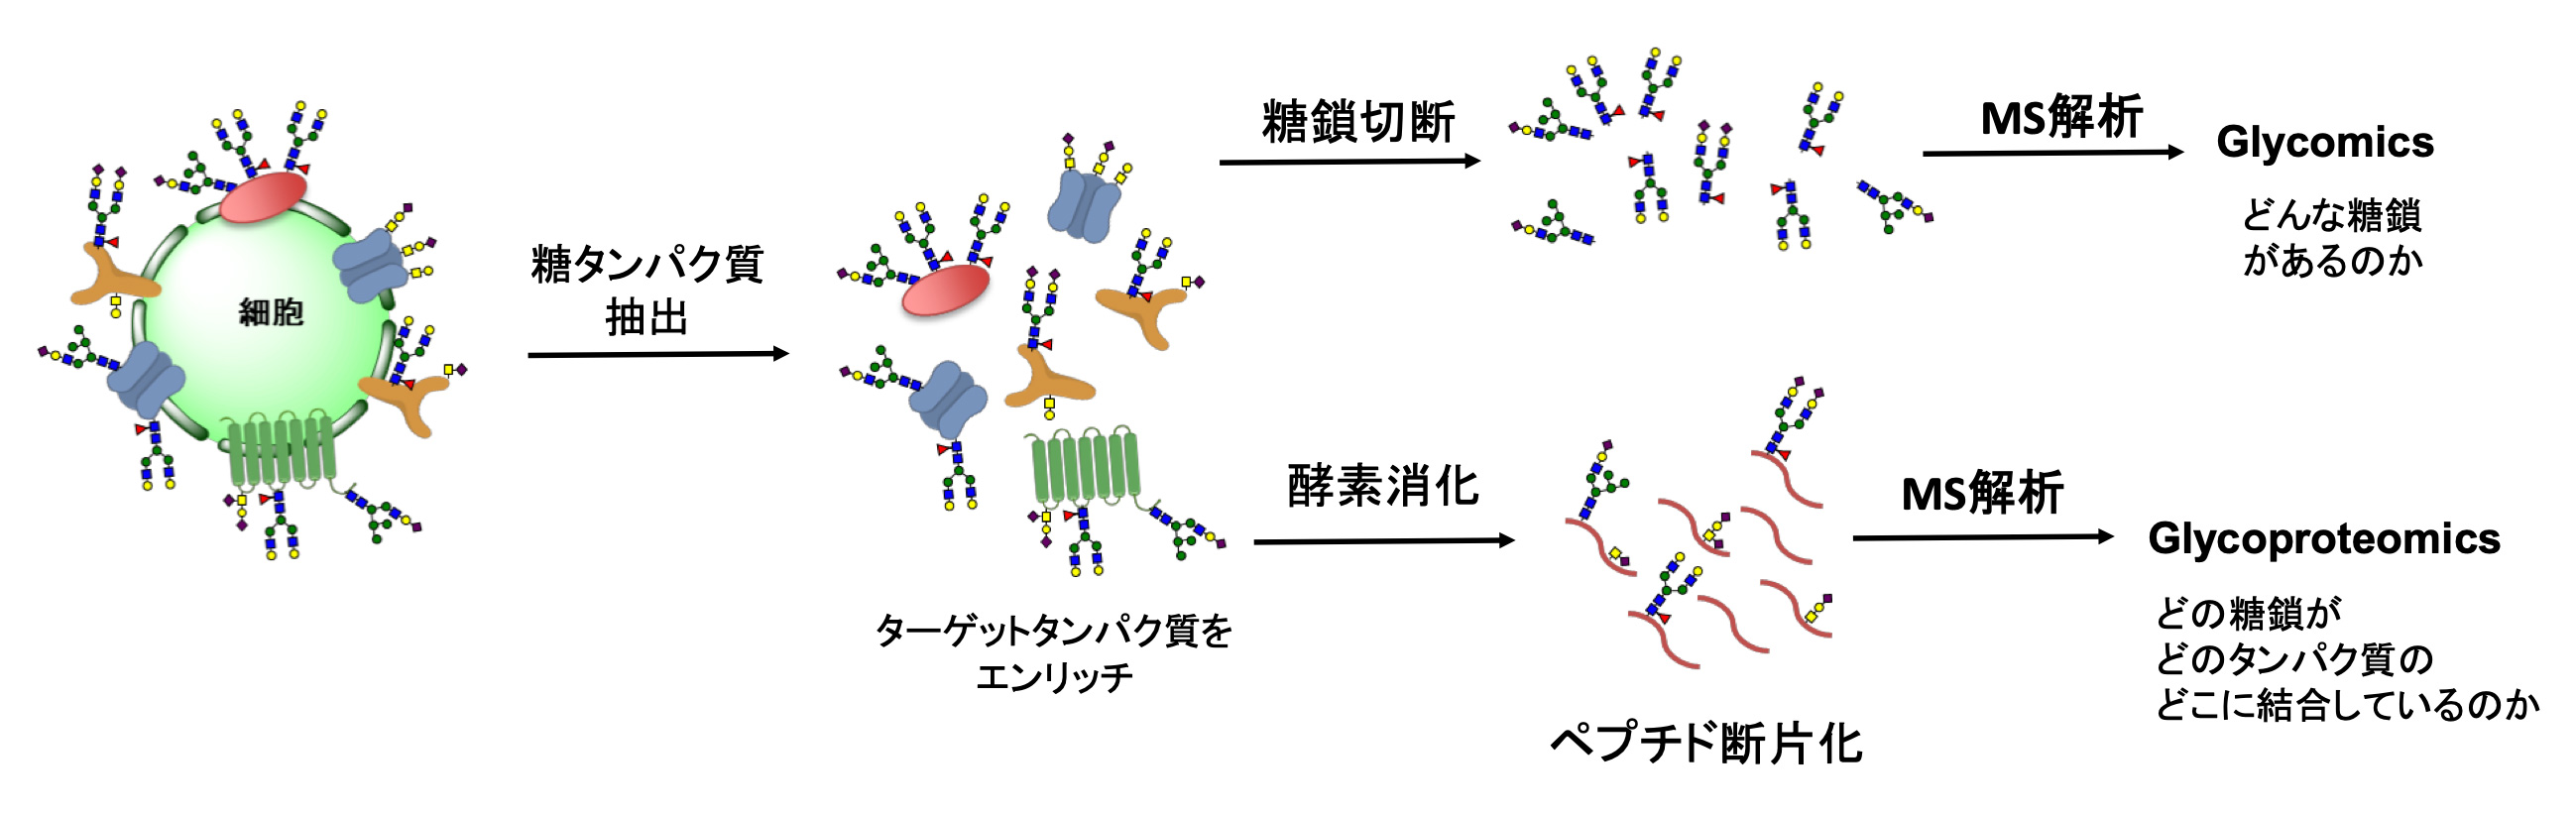 新規活性酵素の探索